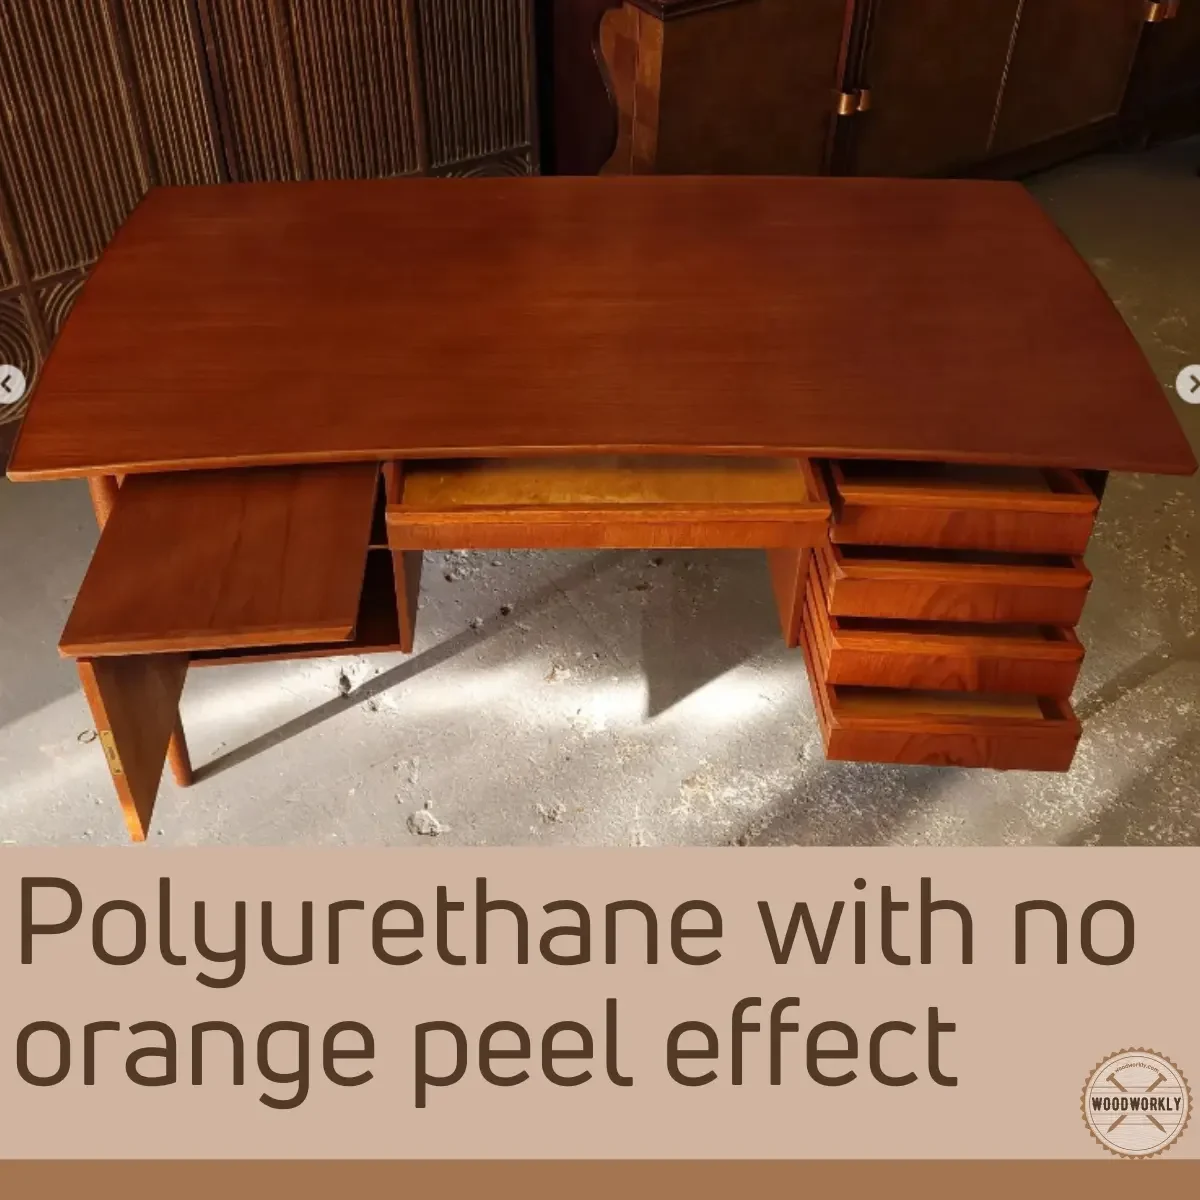 Polyurethane with no orange peel effect